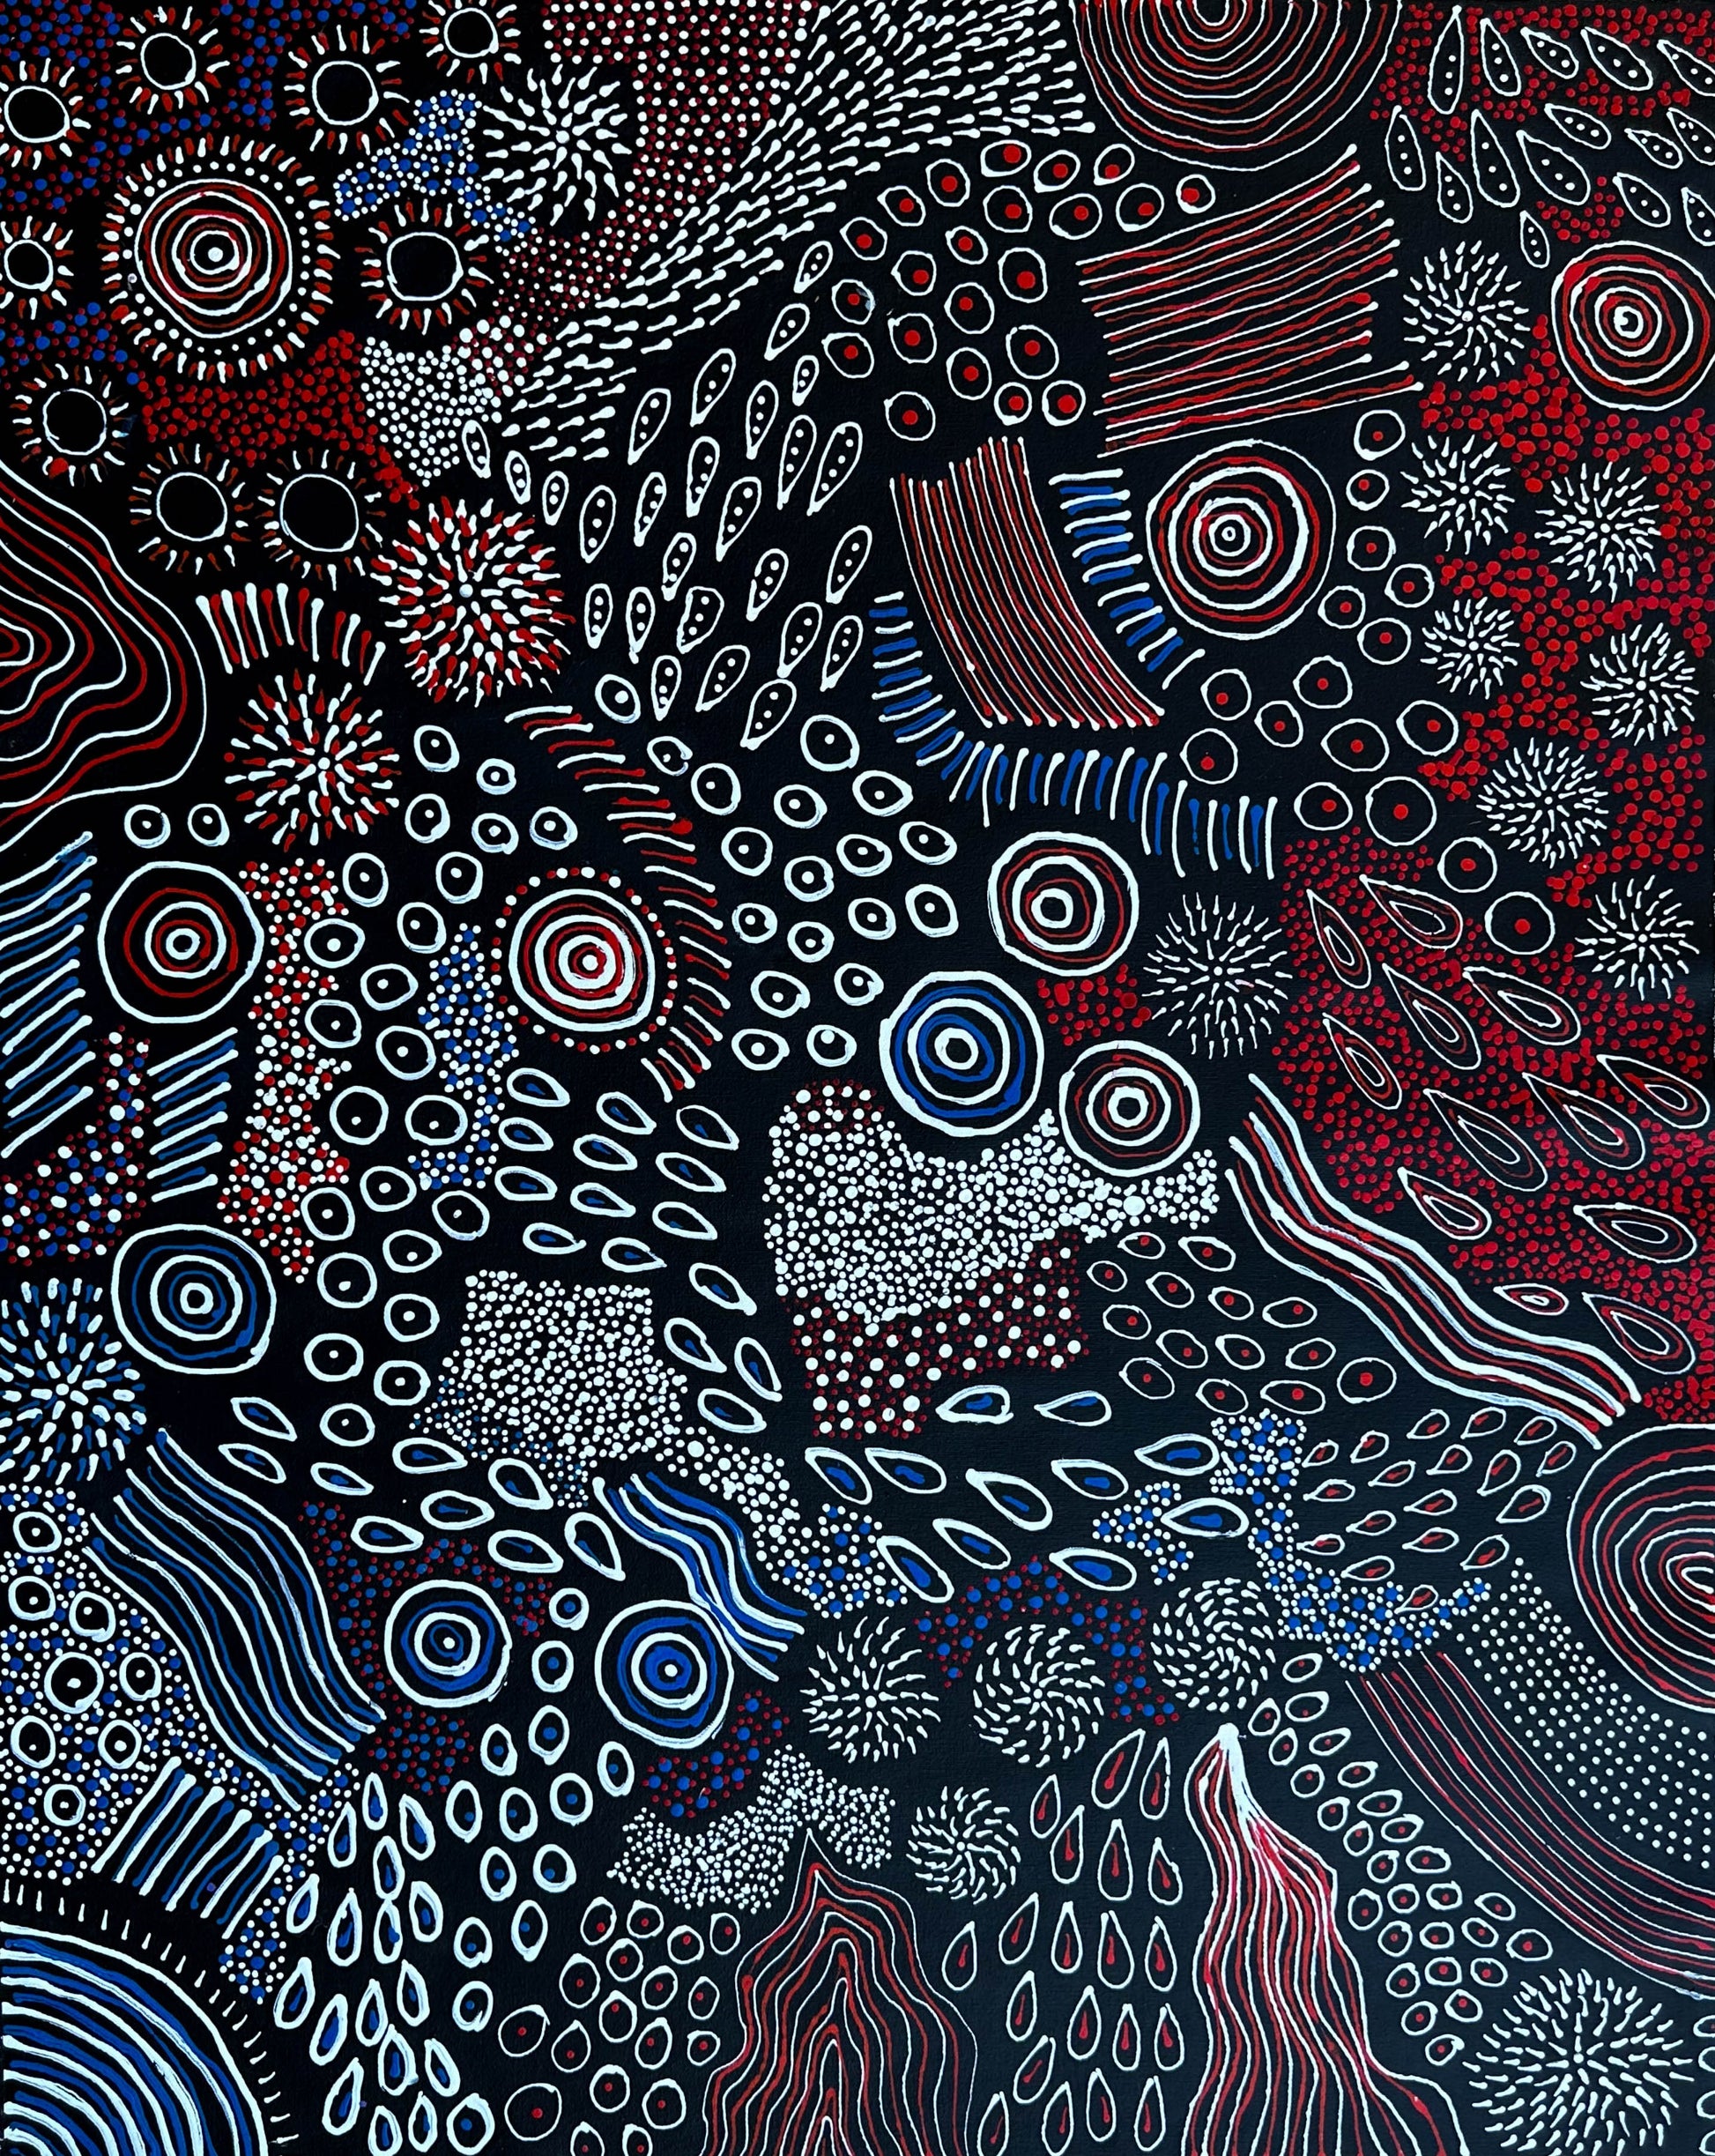 Anna Pitjara Petyarre - Aboriginal Art - Indigenous Art - Australian Art - Awelye - Women's Ceremony - Art work - Painting - Dot Painting - Dot Art - Female Artist - Darwin Based Gallery - Contemporary Art - Traditional Art - Iconography - Symbolism